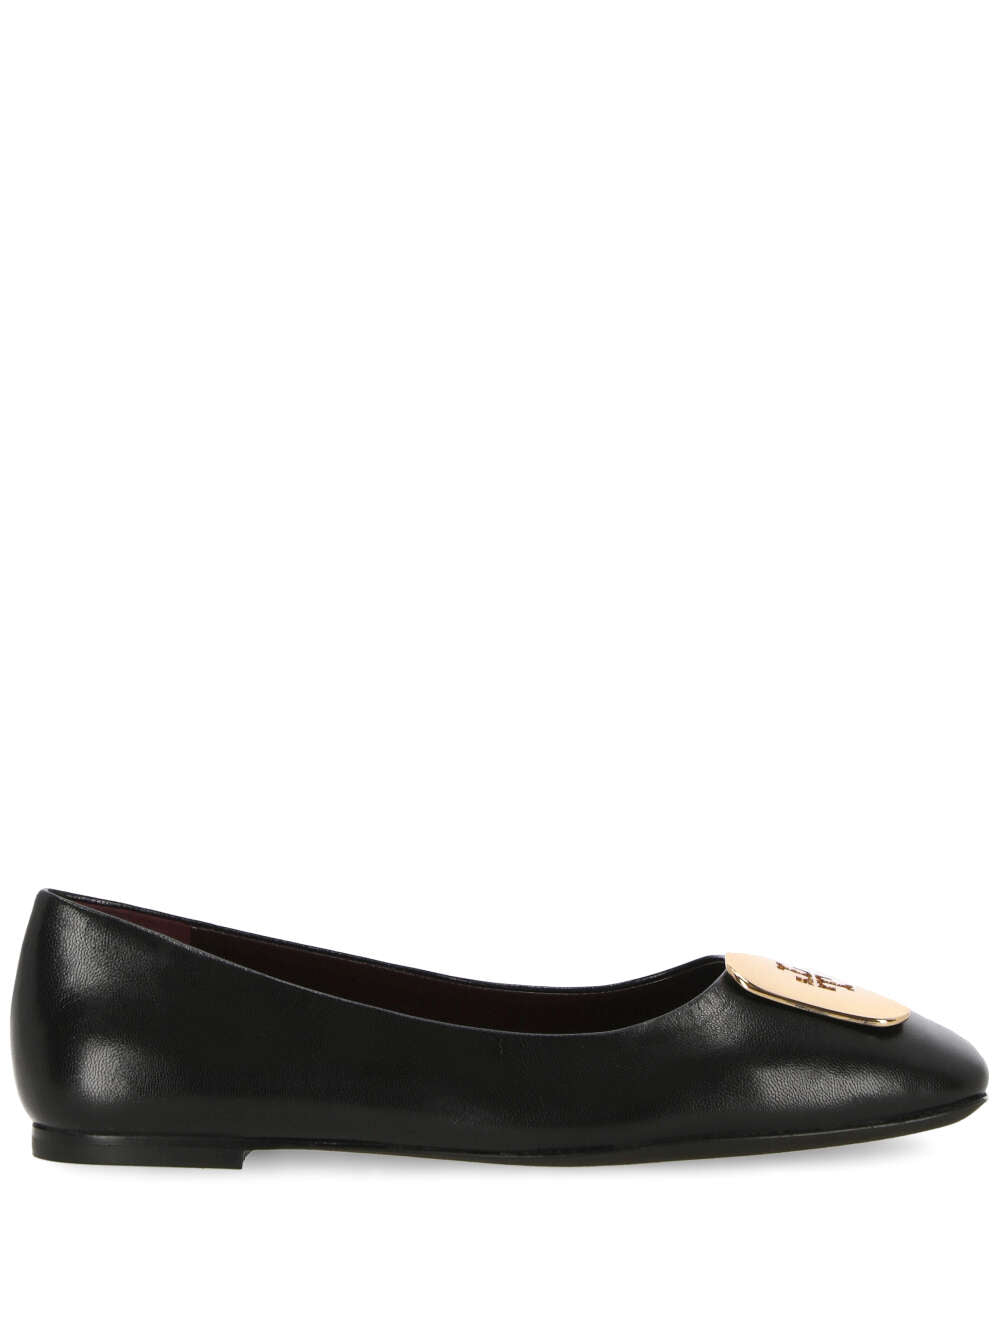 Tory Burch 154077 Woman PERFECT BLACK Flat shoes - Zuklat